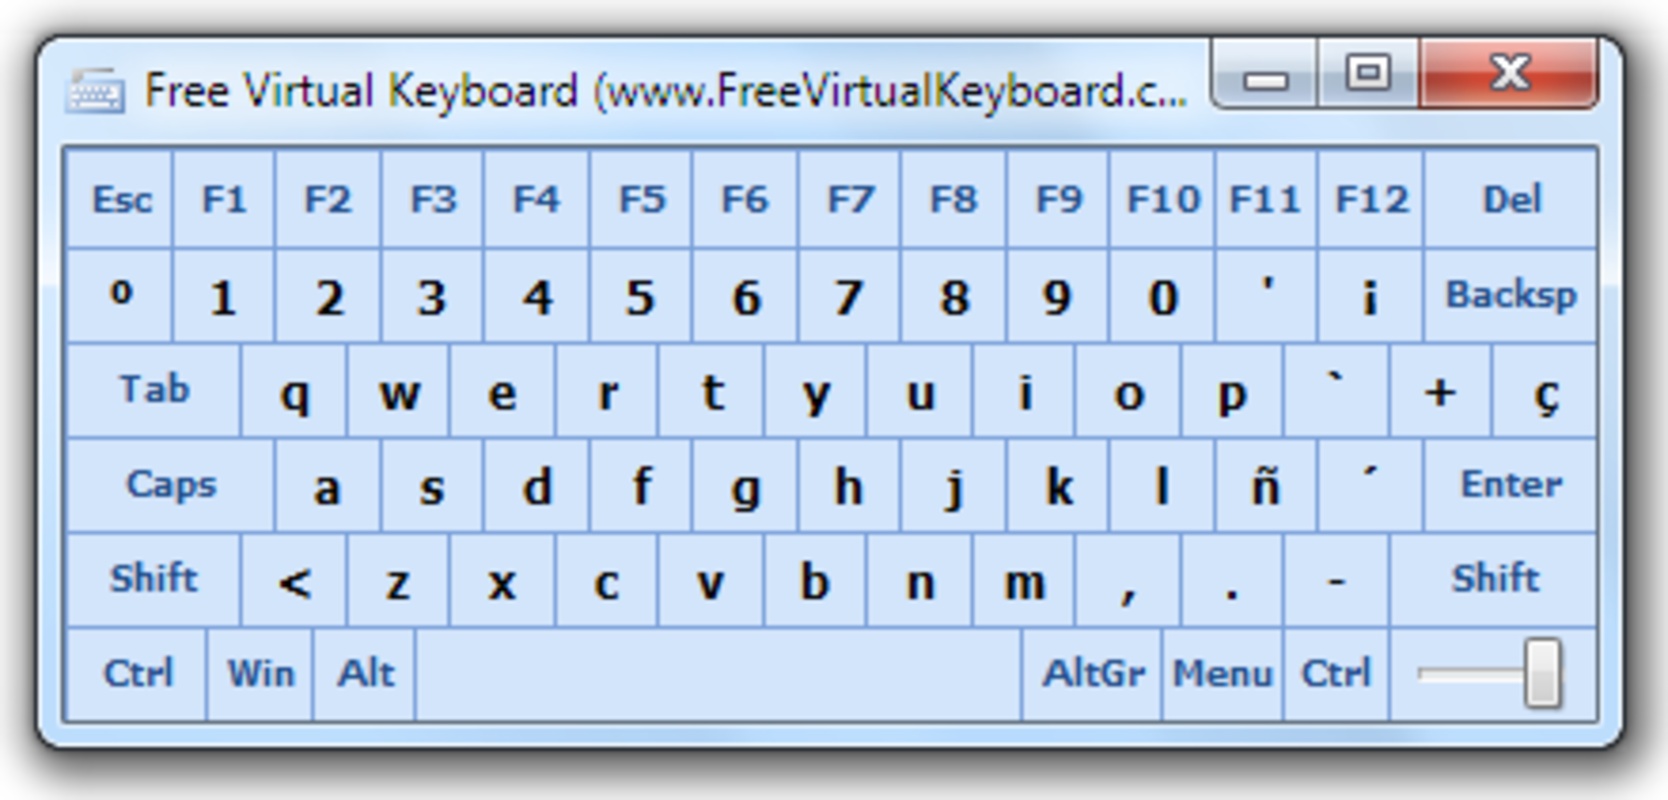 Free Virtual Keyboard 5.0 for Windows Screenshot 1